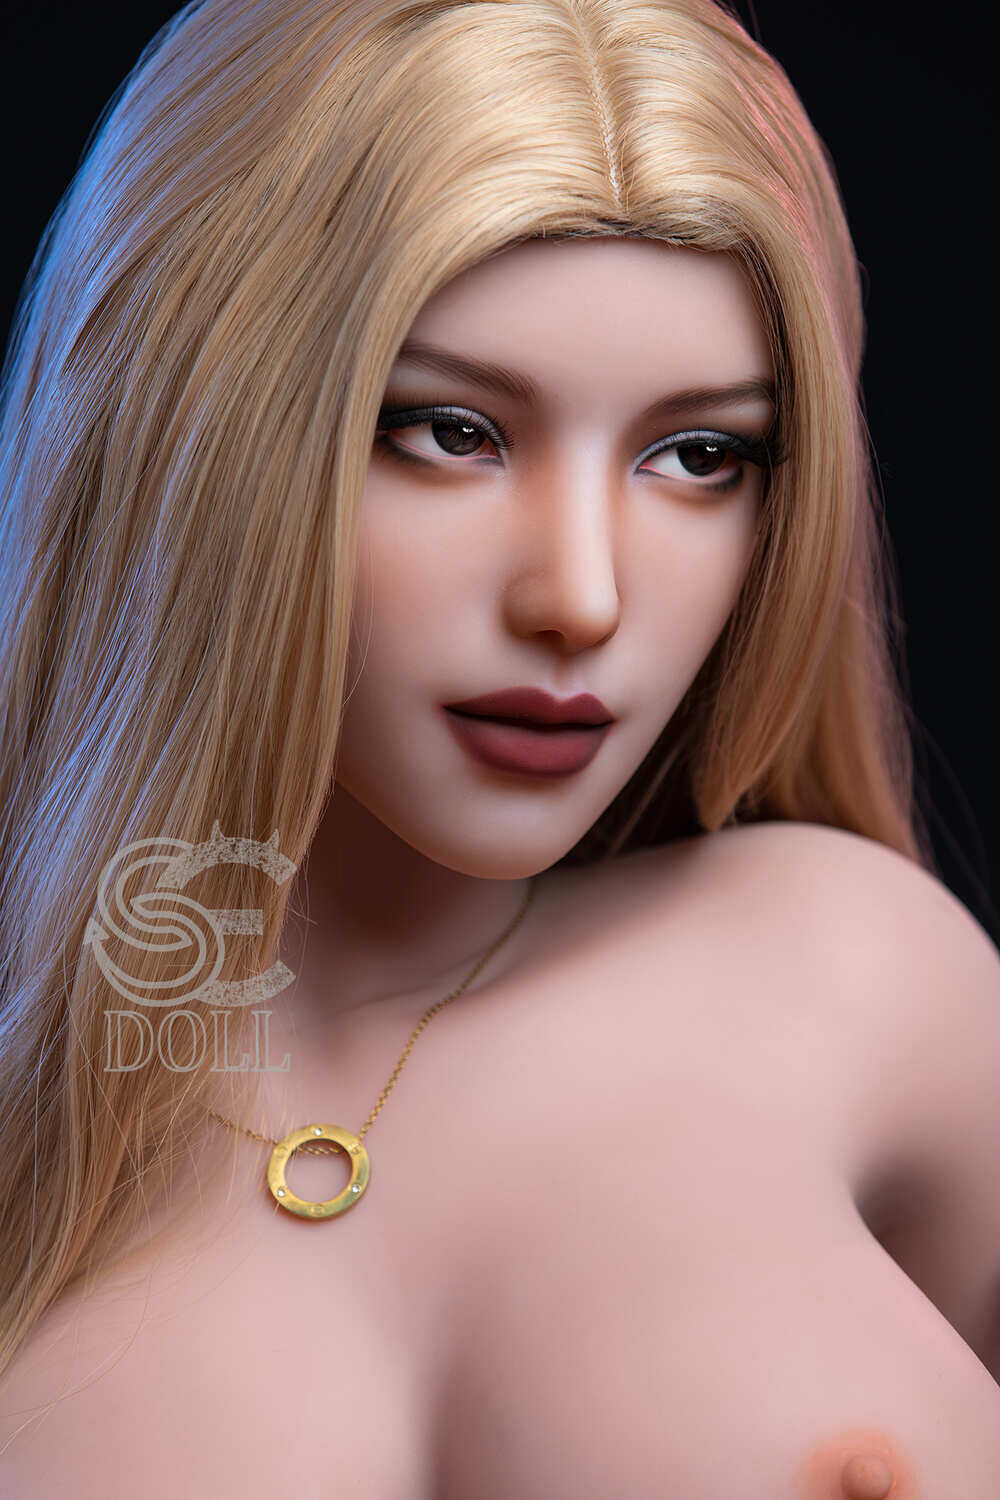 Addilyn - 157cm(5ft2) Large Breast Thin Waist Love SE Dolls image12